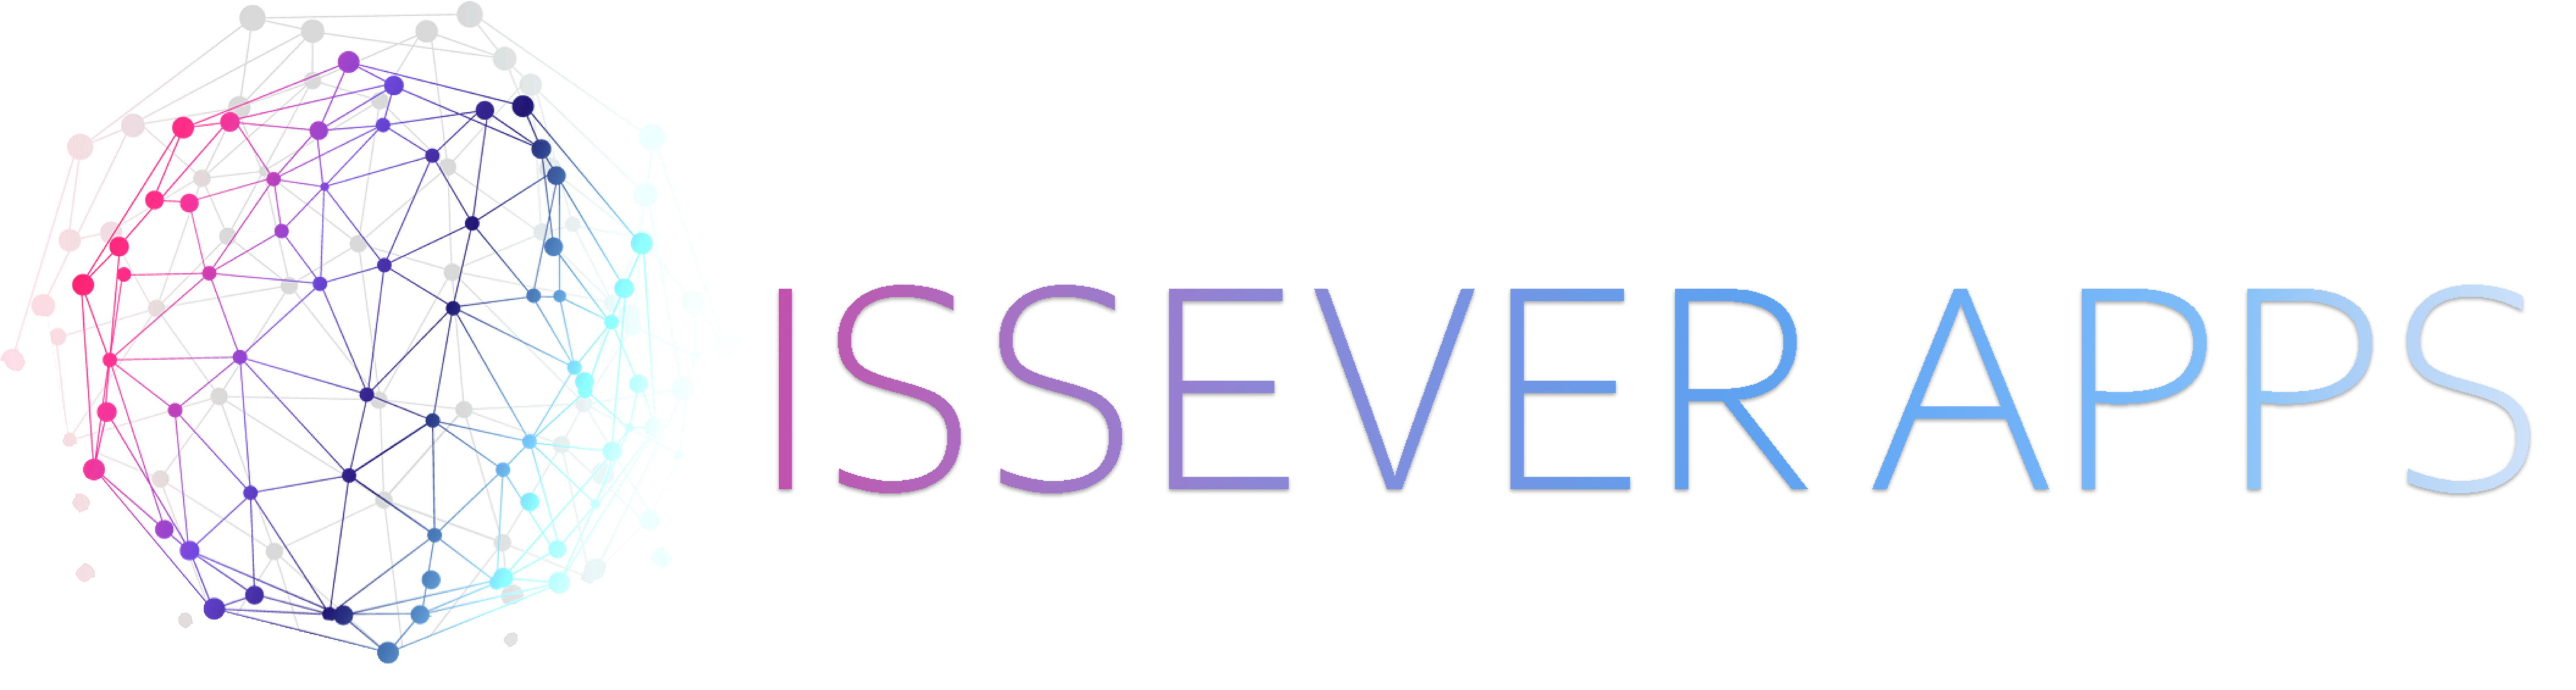 Issever Apps Logo